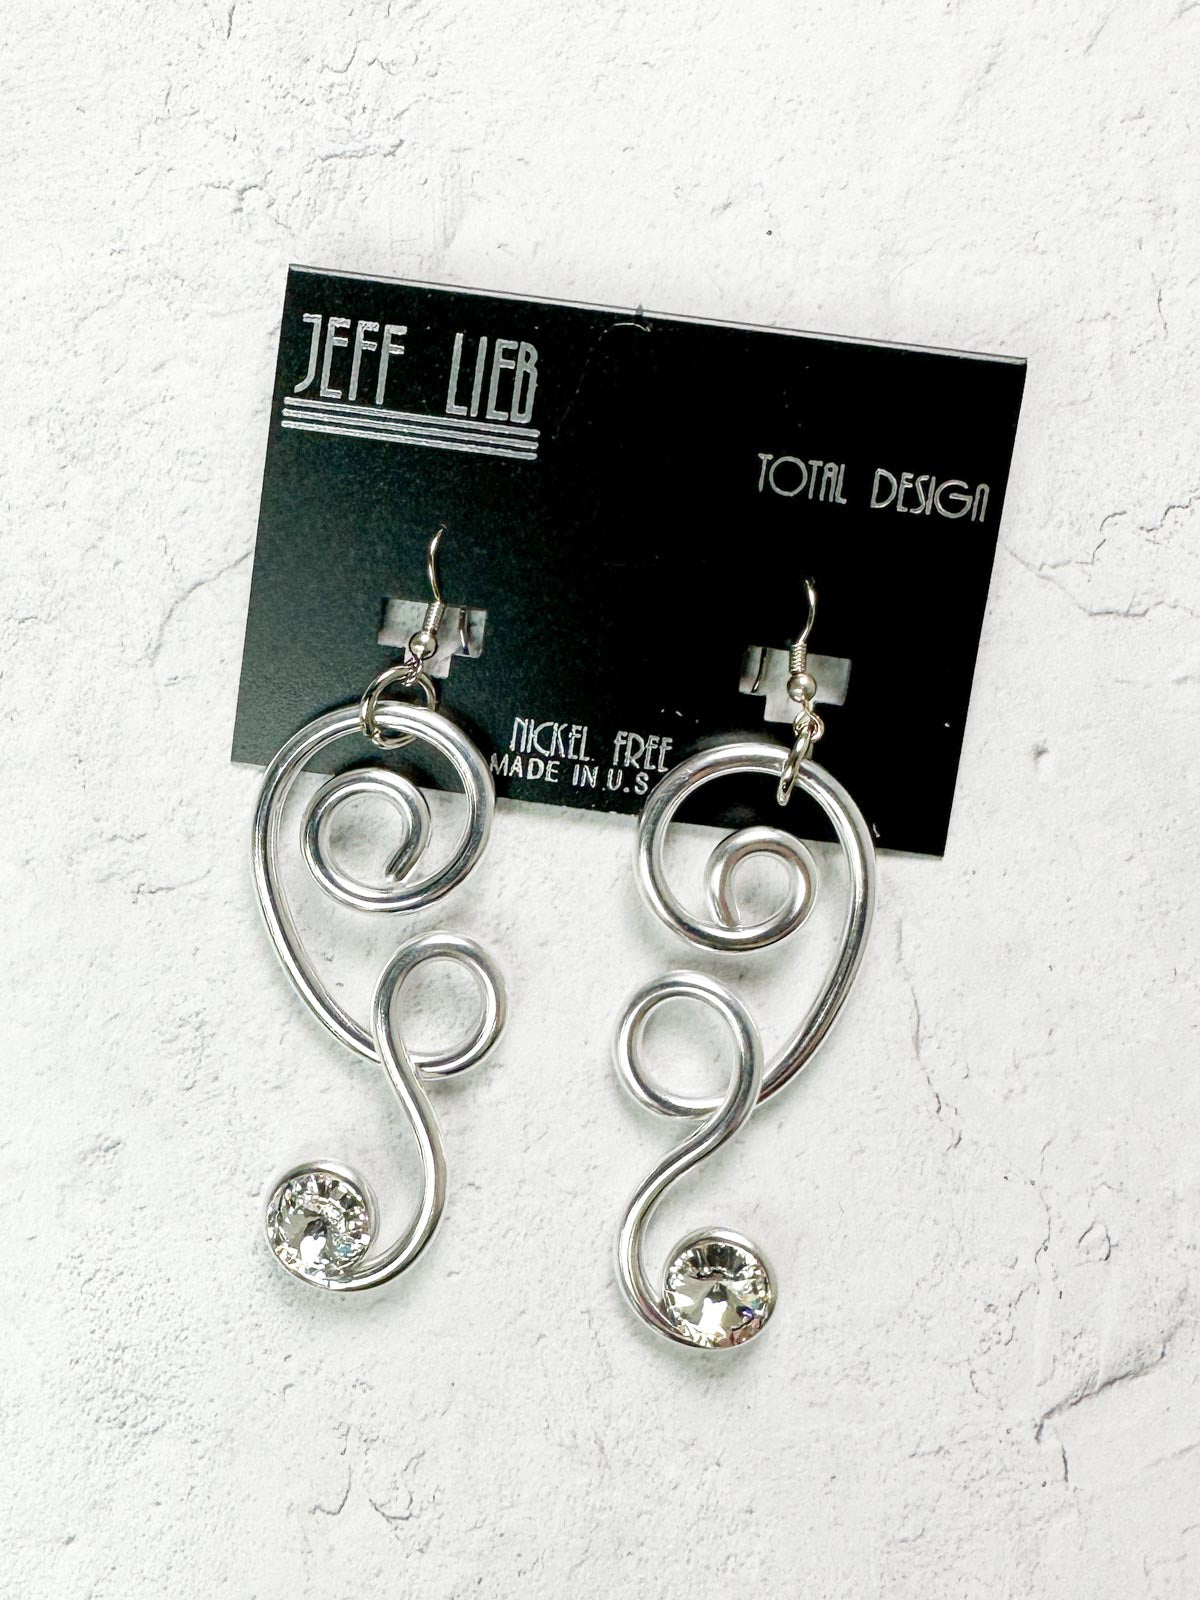 Jeff Lieb Total Design Jewelry Crystal & Wire Swirl Drop Earrings, Silver - Statement Boutique